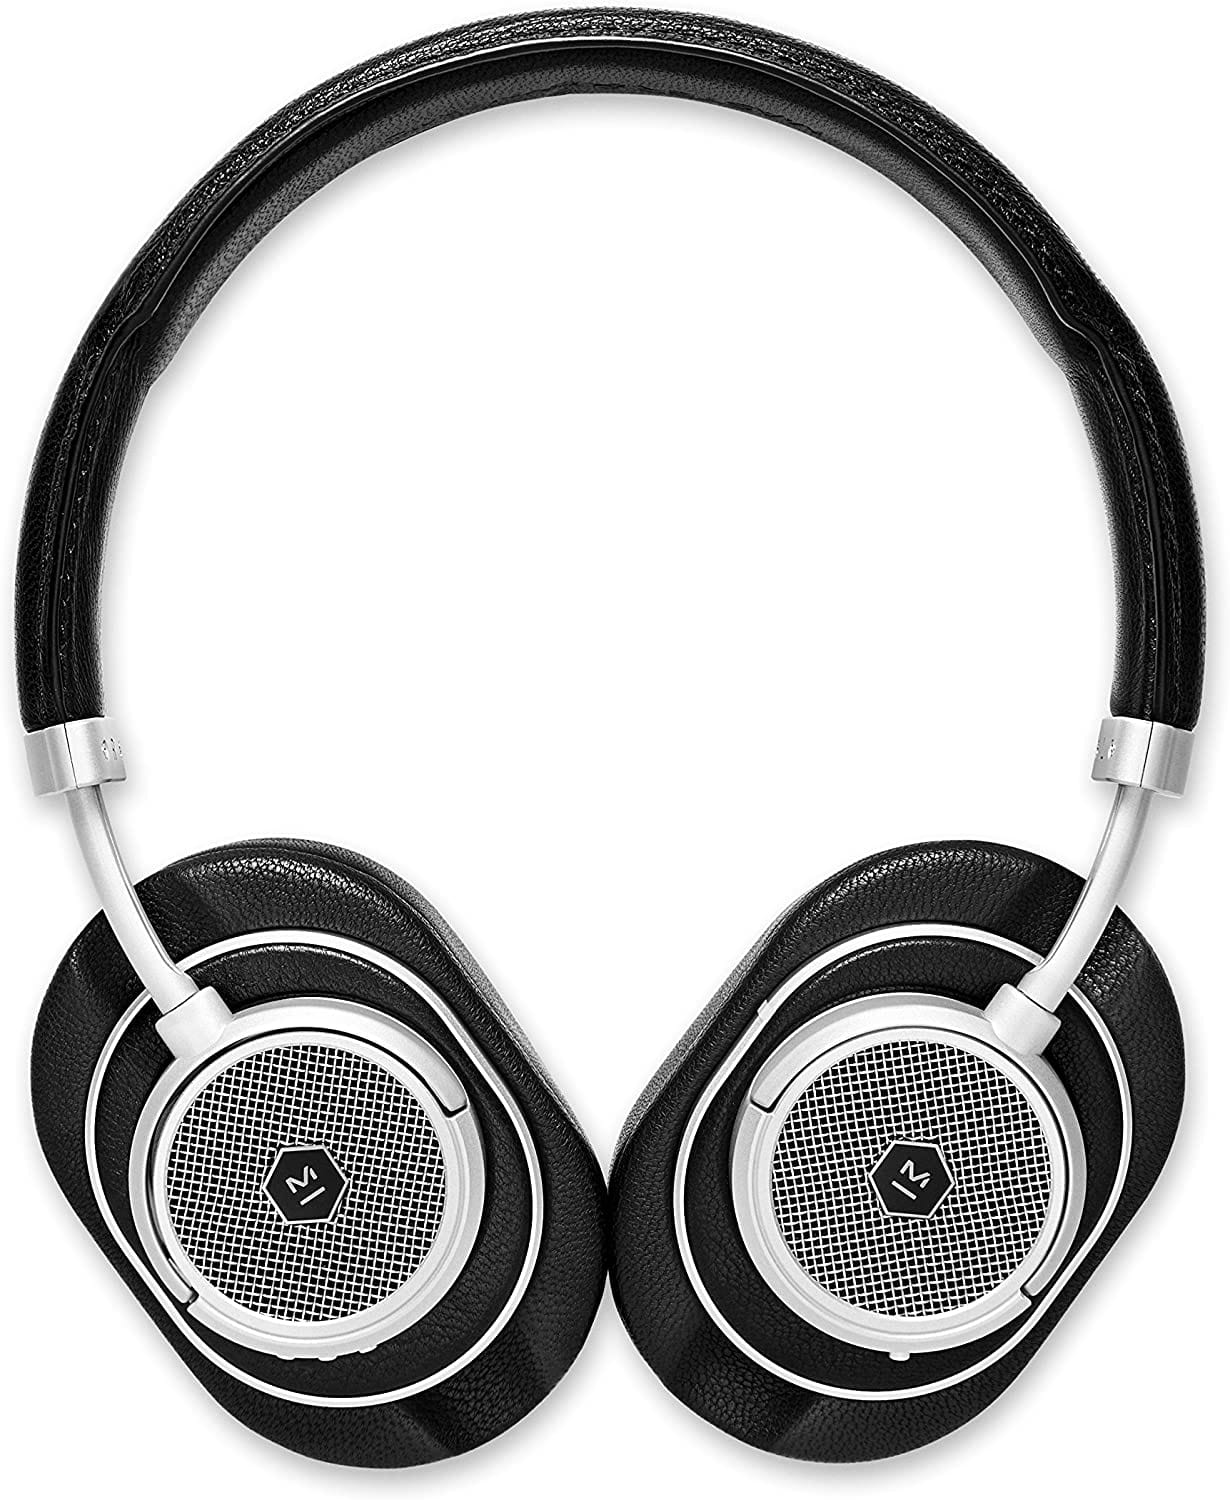 SmartTechShopping Headphones Master & Dynamic MW50+ Wireless Bluetooth Headphones